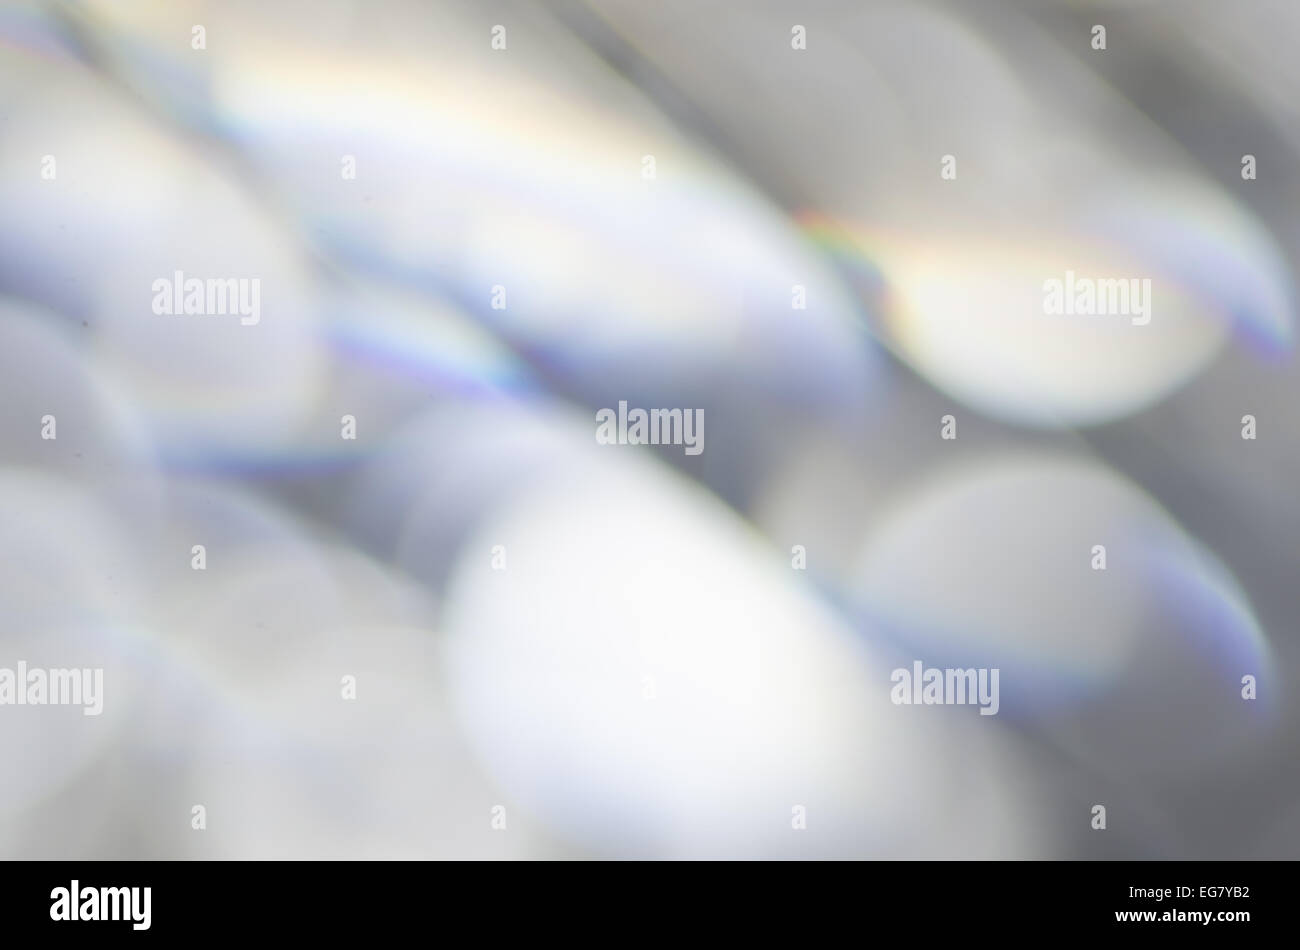 defocus lights blurred background texture Stock Photo